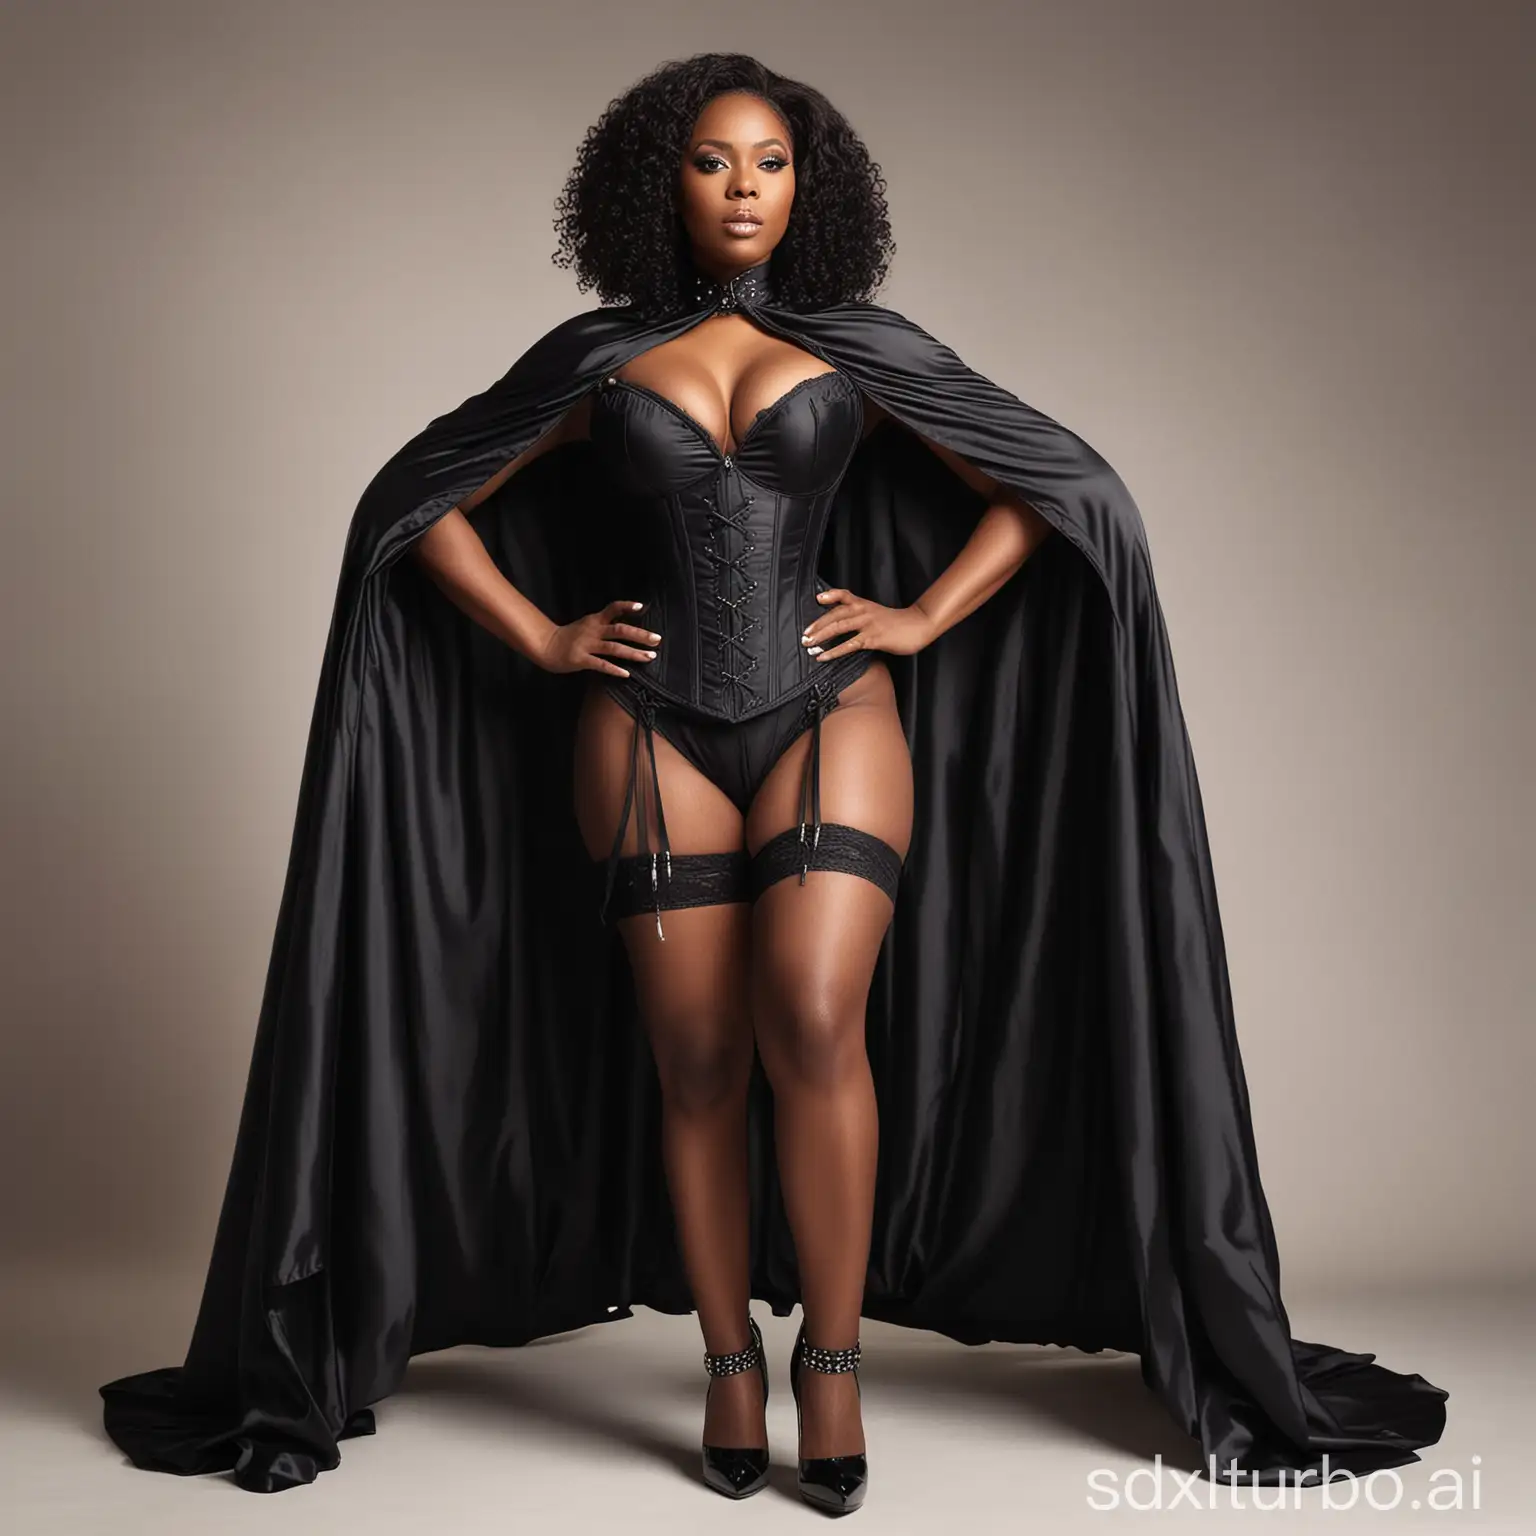 black woman, large breasts, wears black cape with hig collar , wears corset , wears hig heels